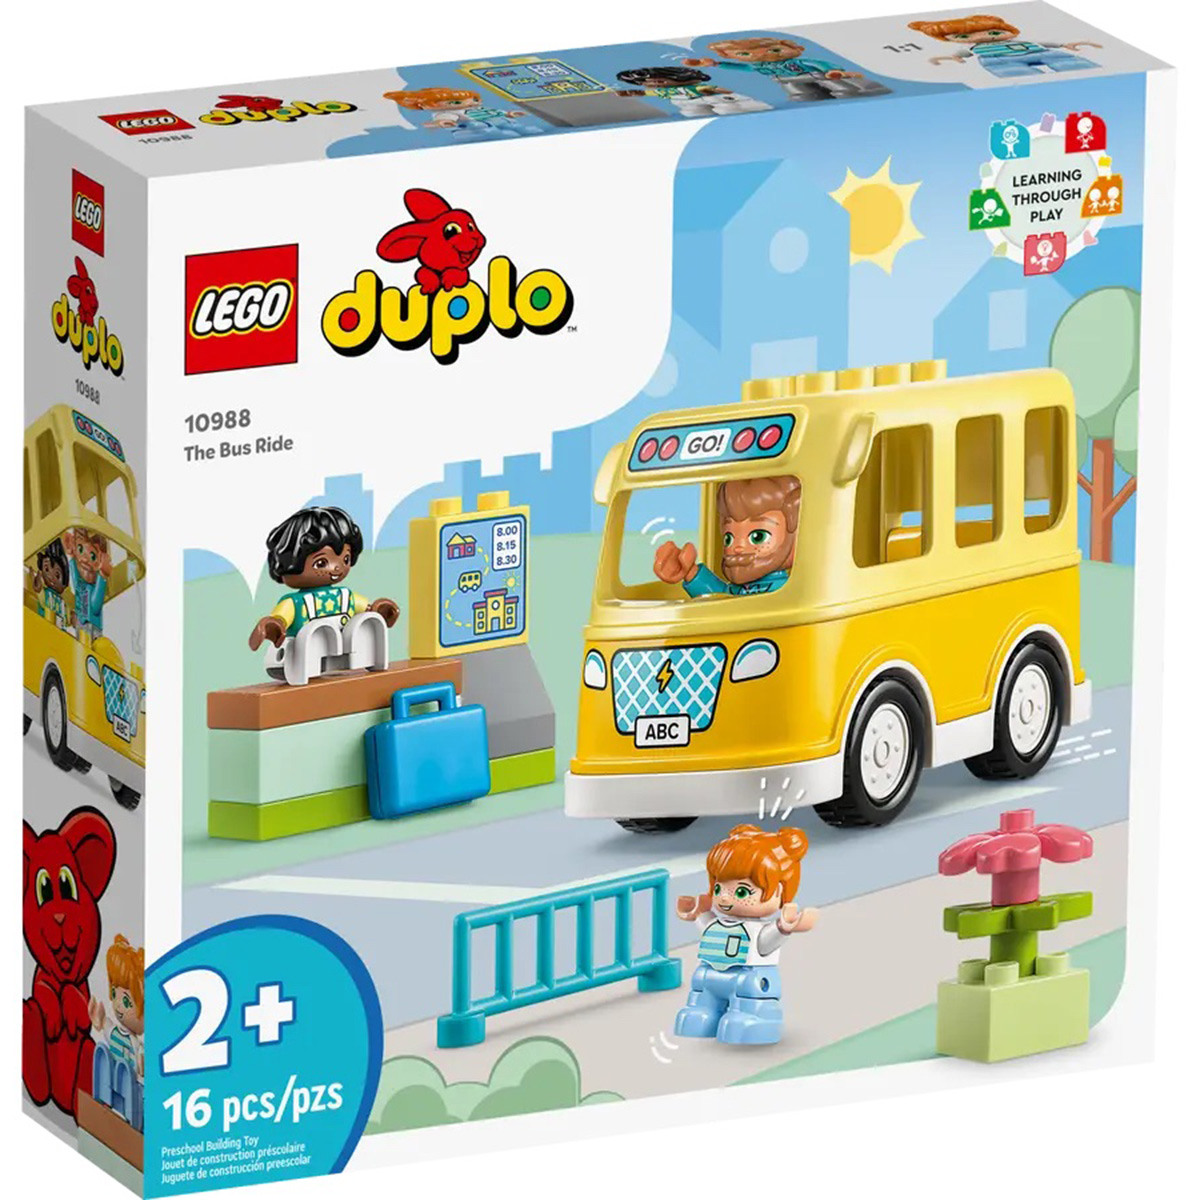 LEGO(R) Duplo The Bus Ride